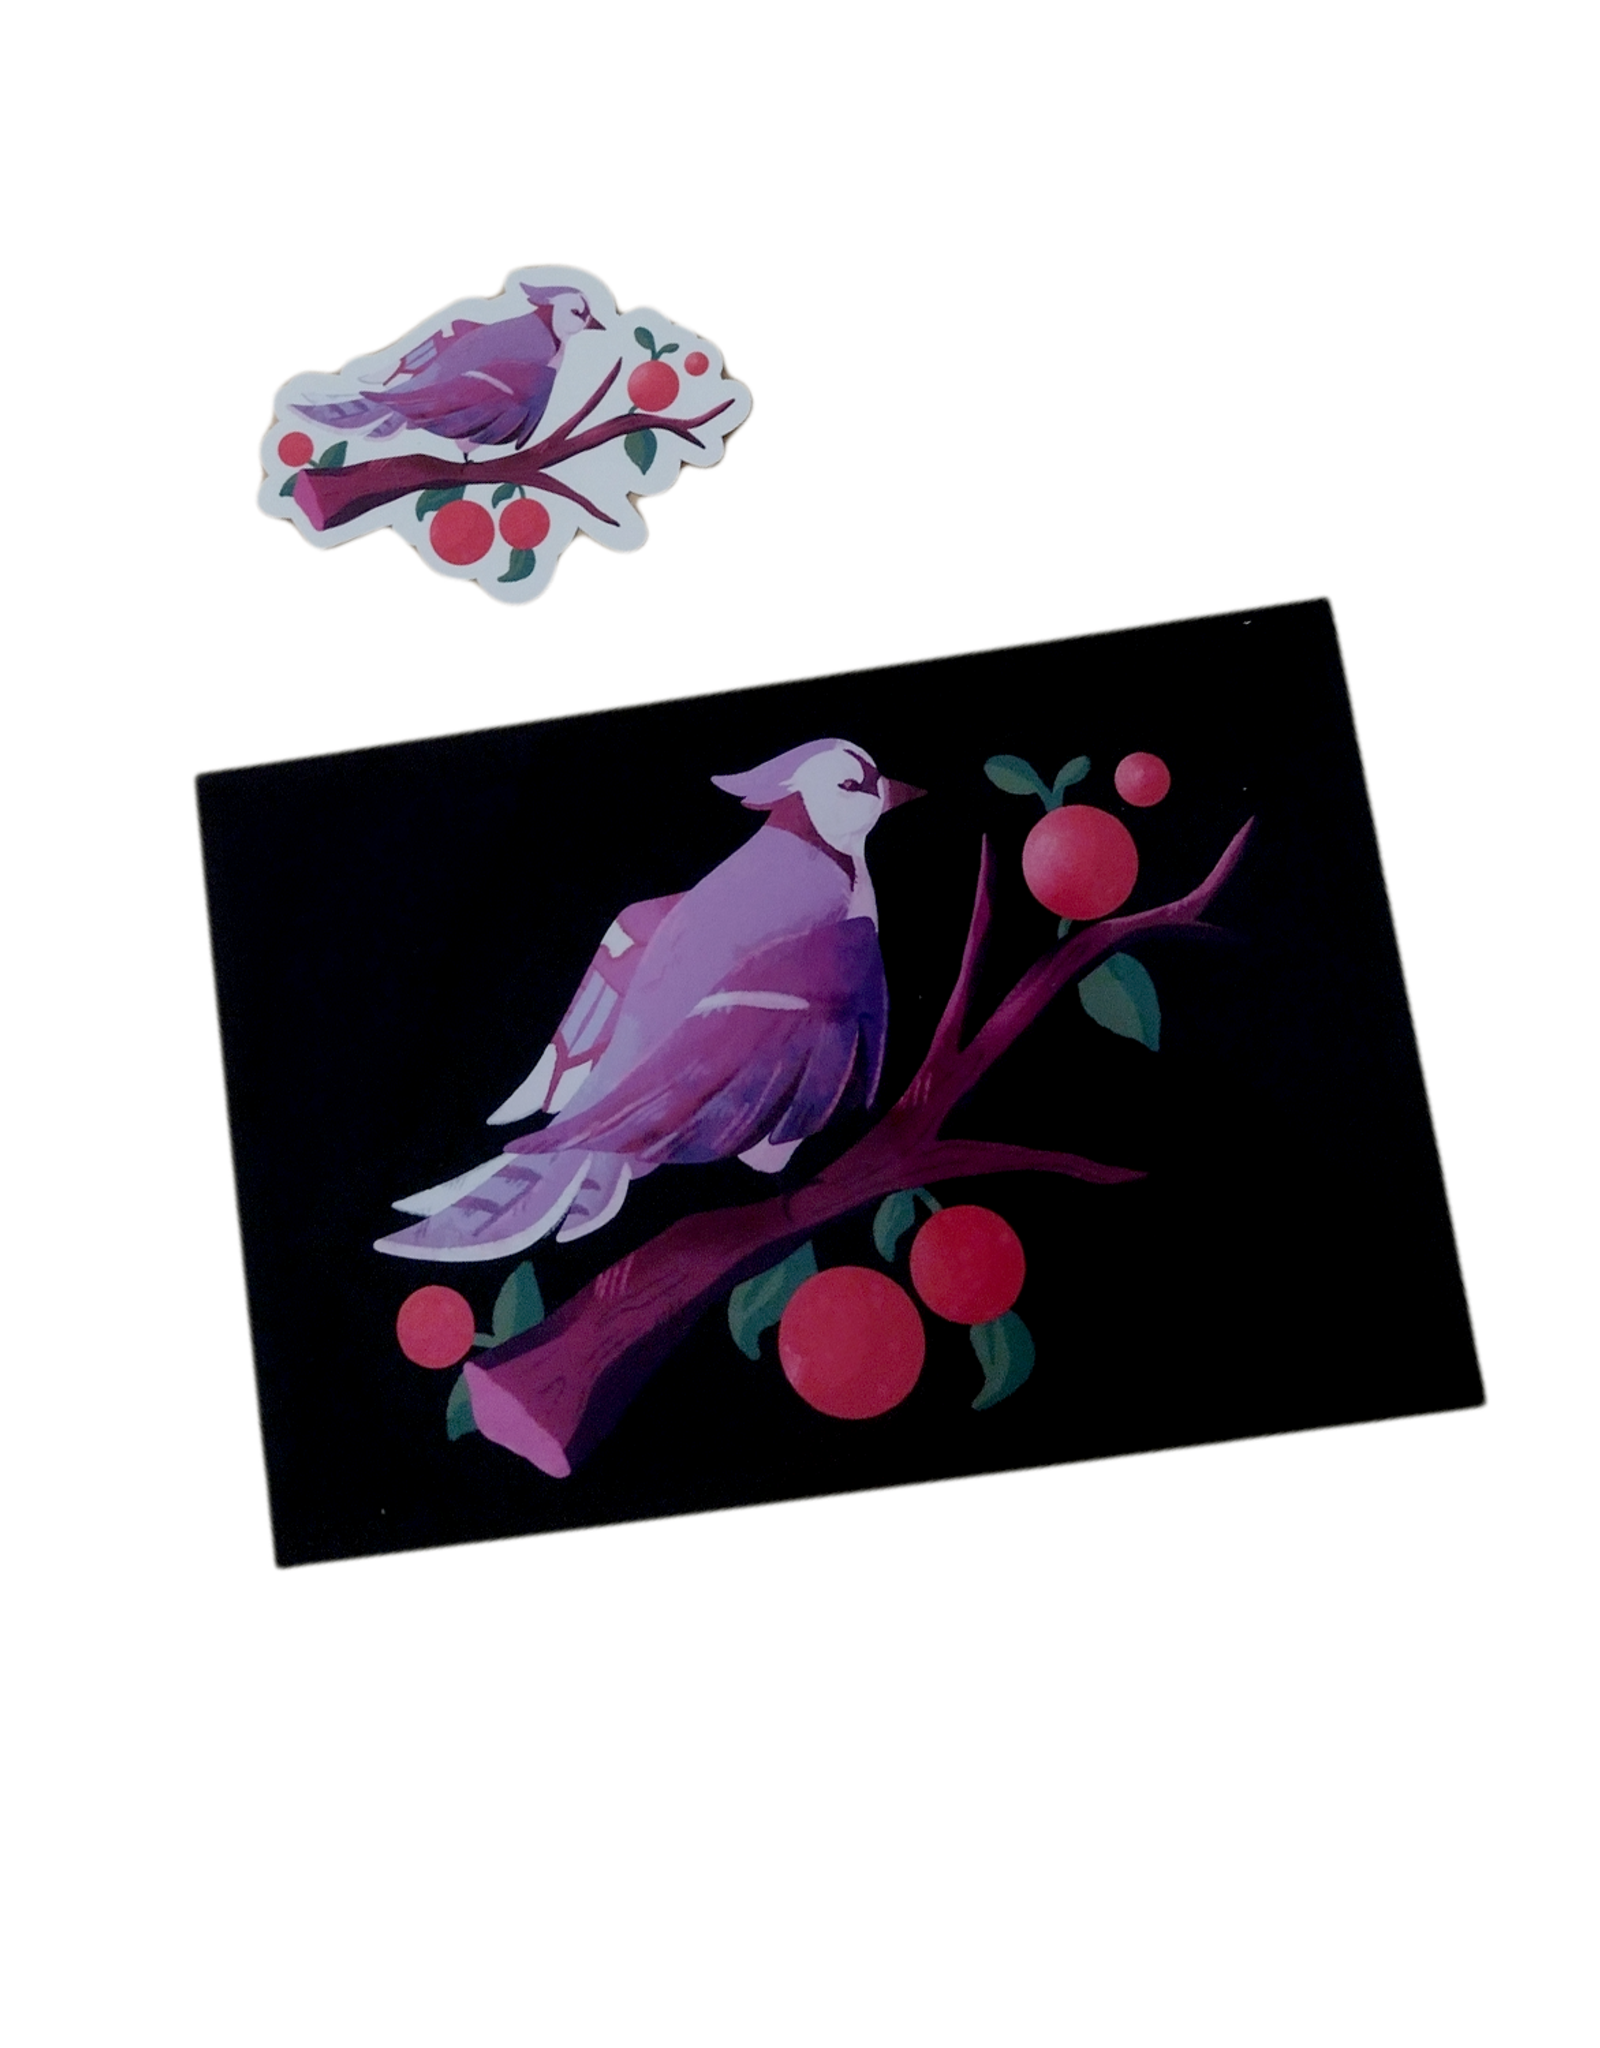 WishingOwls "Blue Jay" print + sticker by WishingOwls